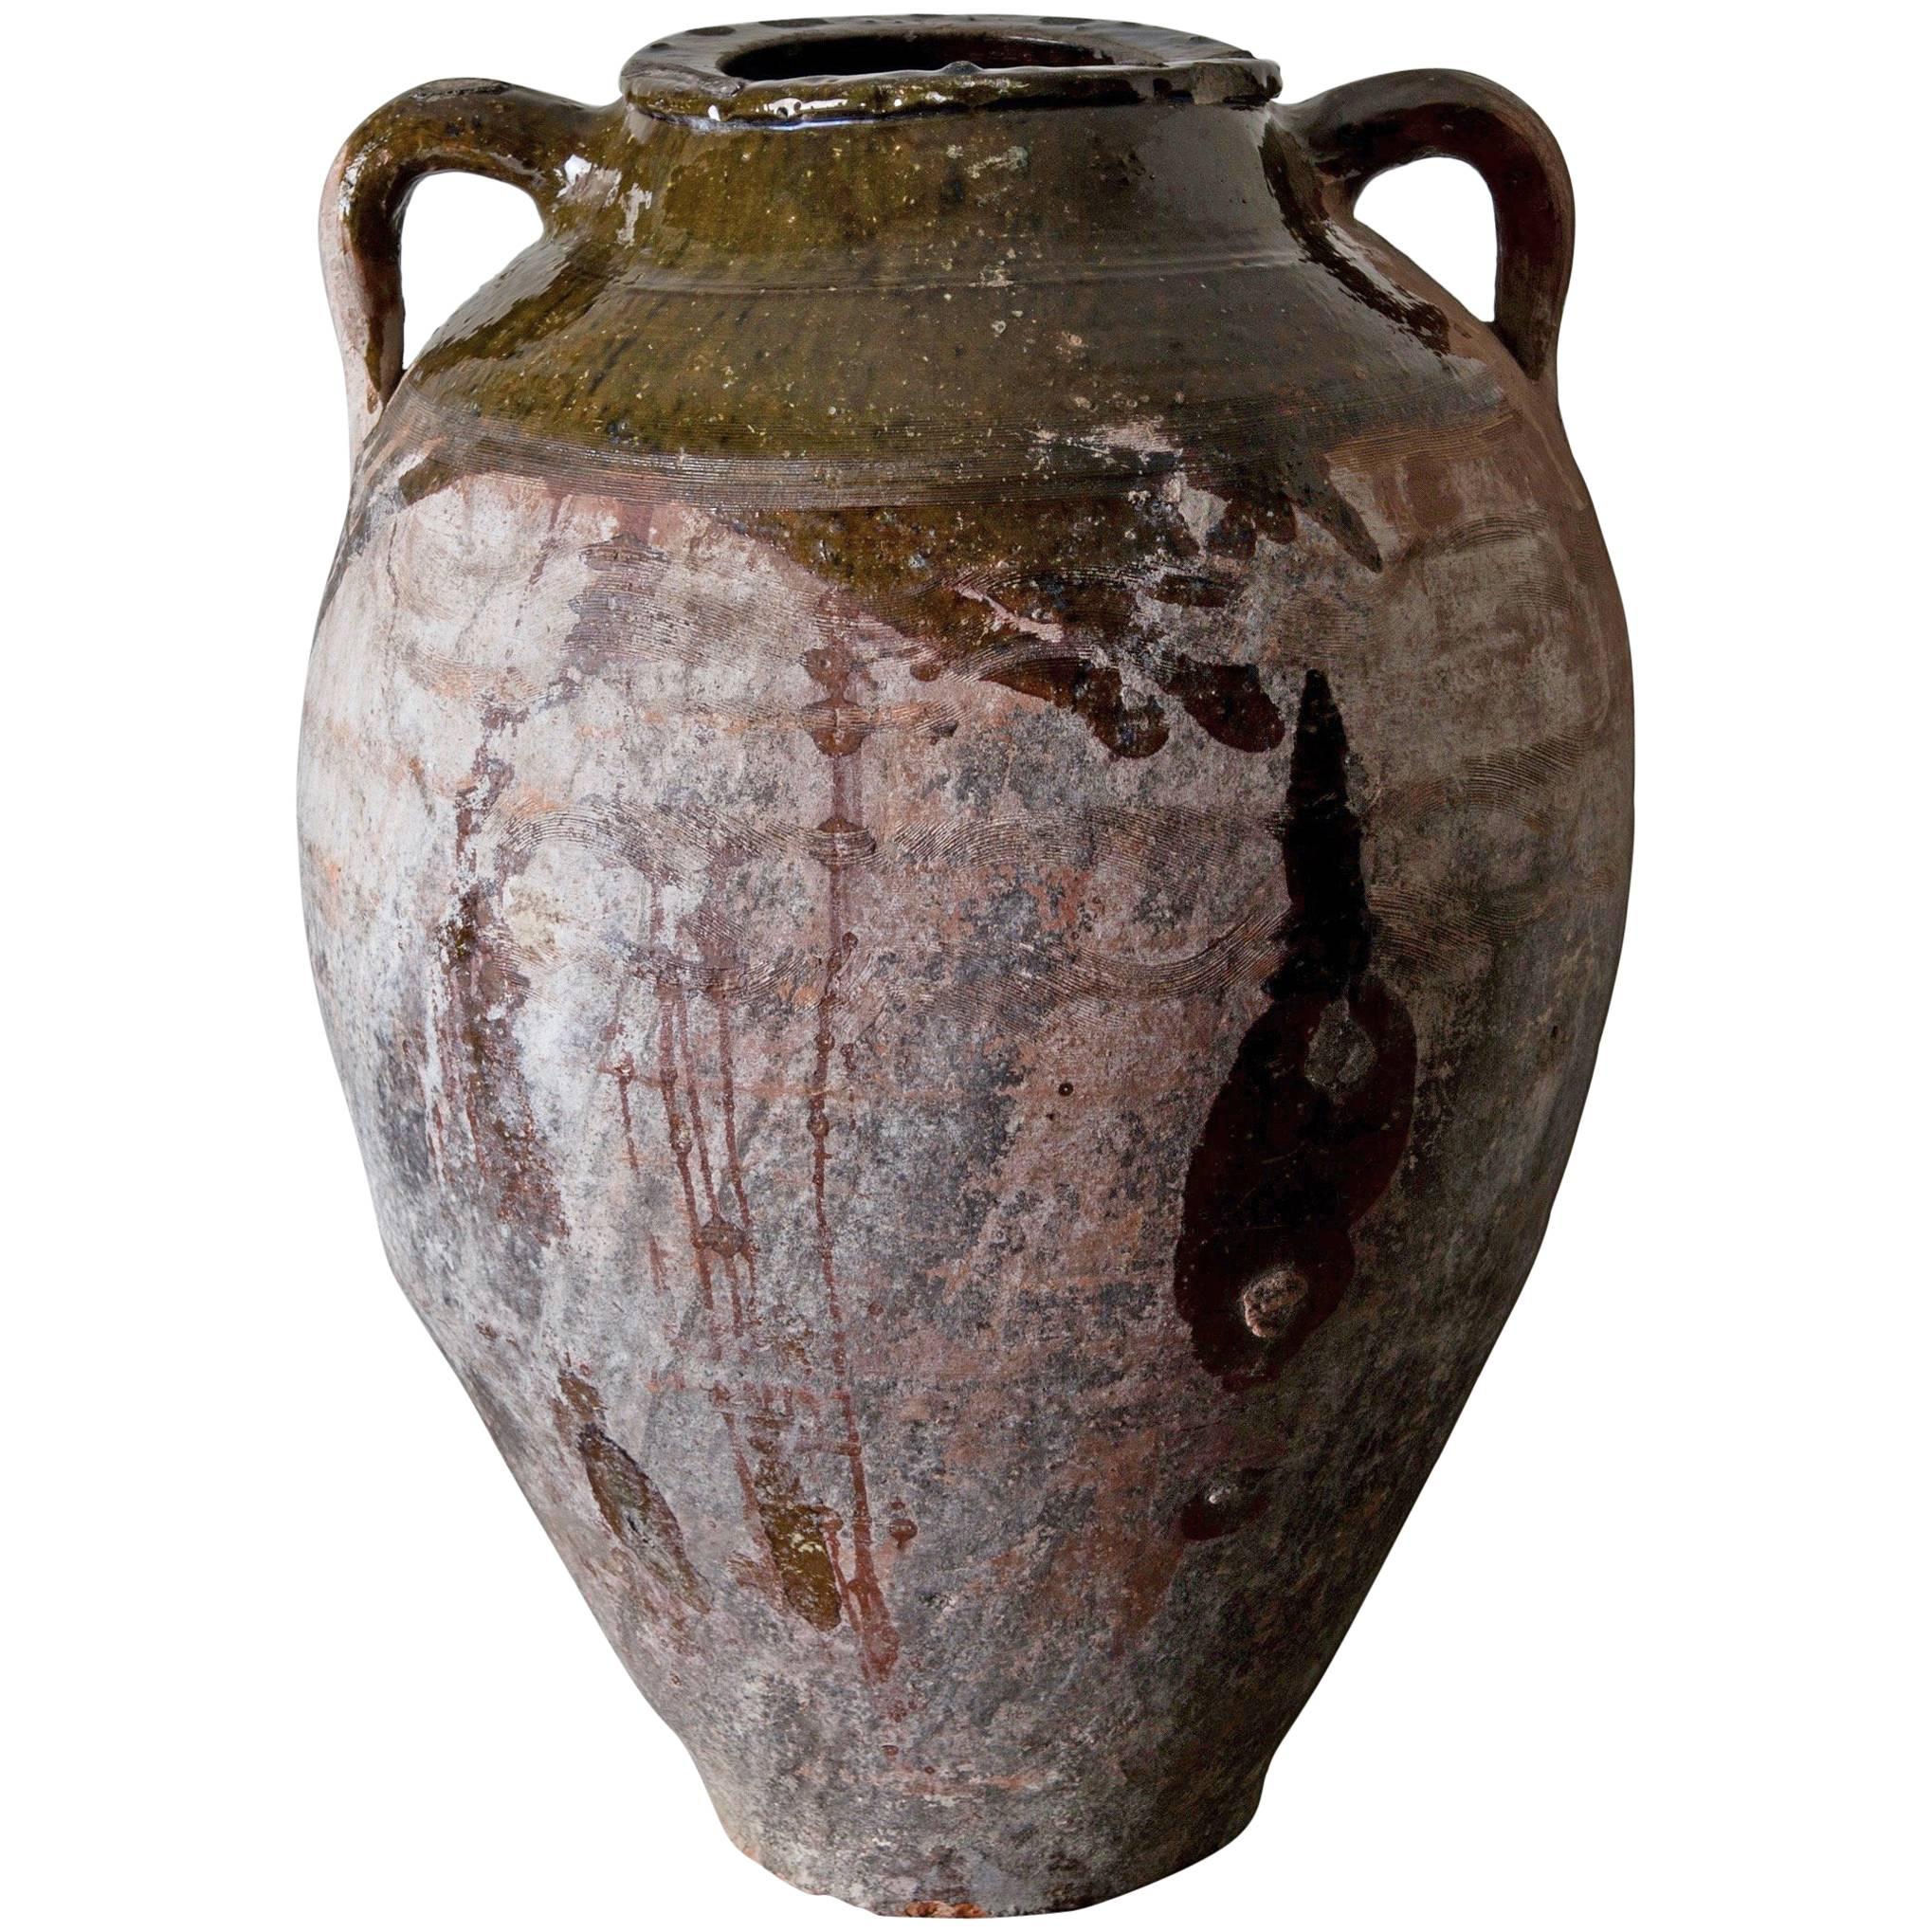 Jar Urn Italy Large 19th Century Europe